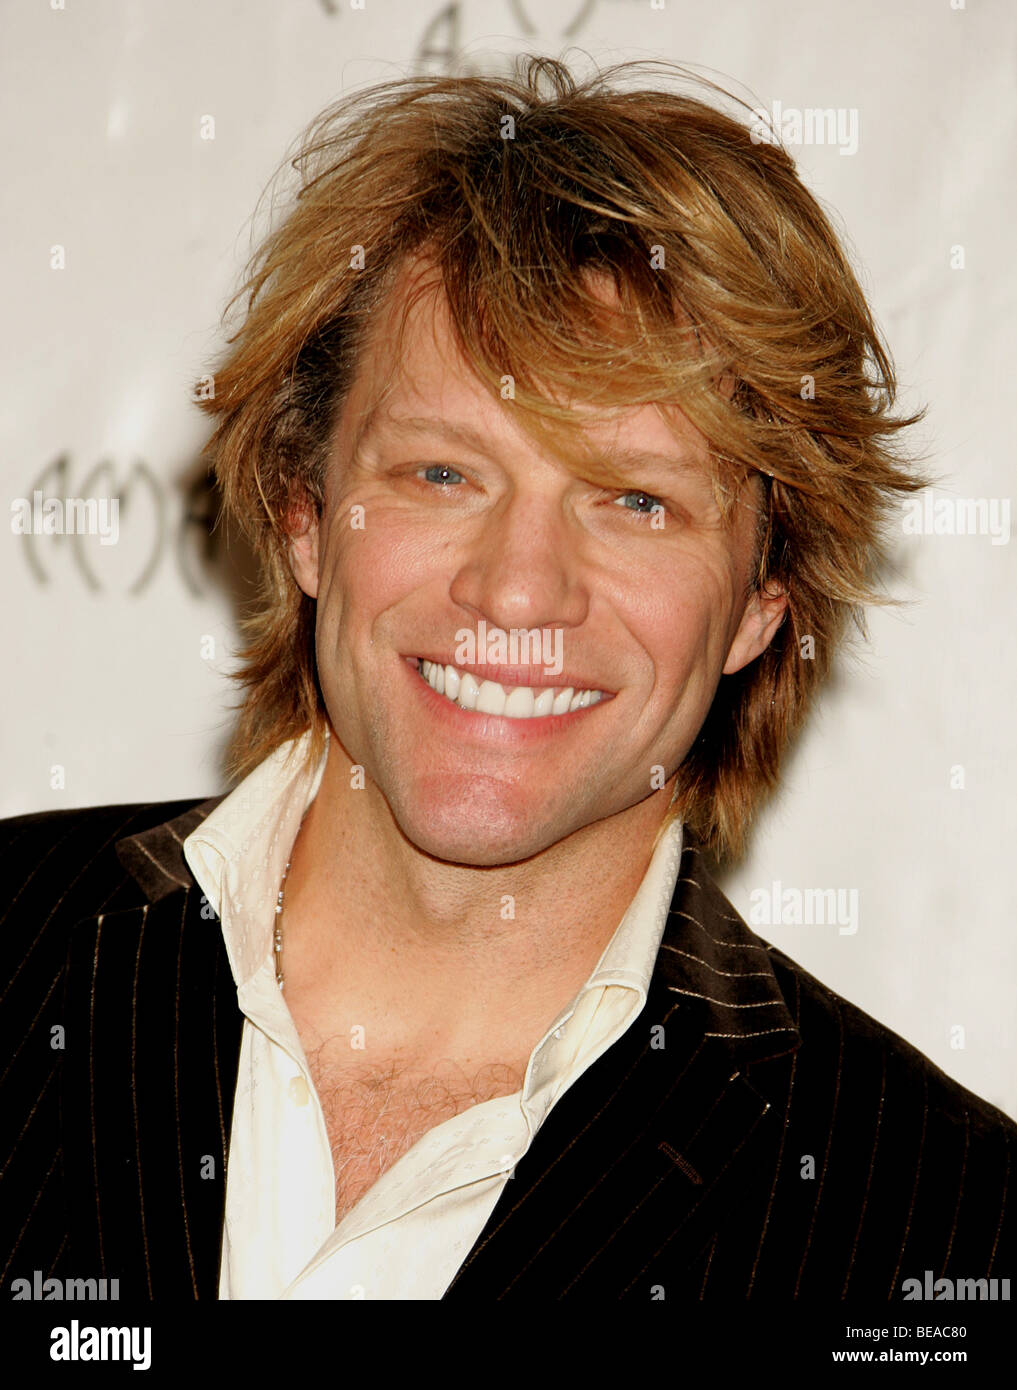 BON JOVI - Jon Bon Jovi musicien rock américain Photo Stock - Alamy